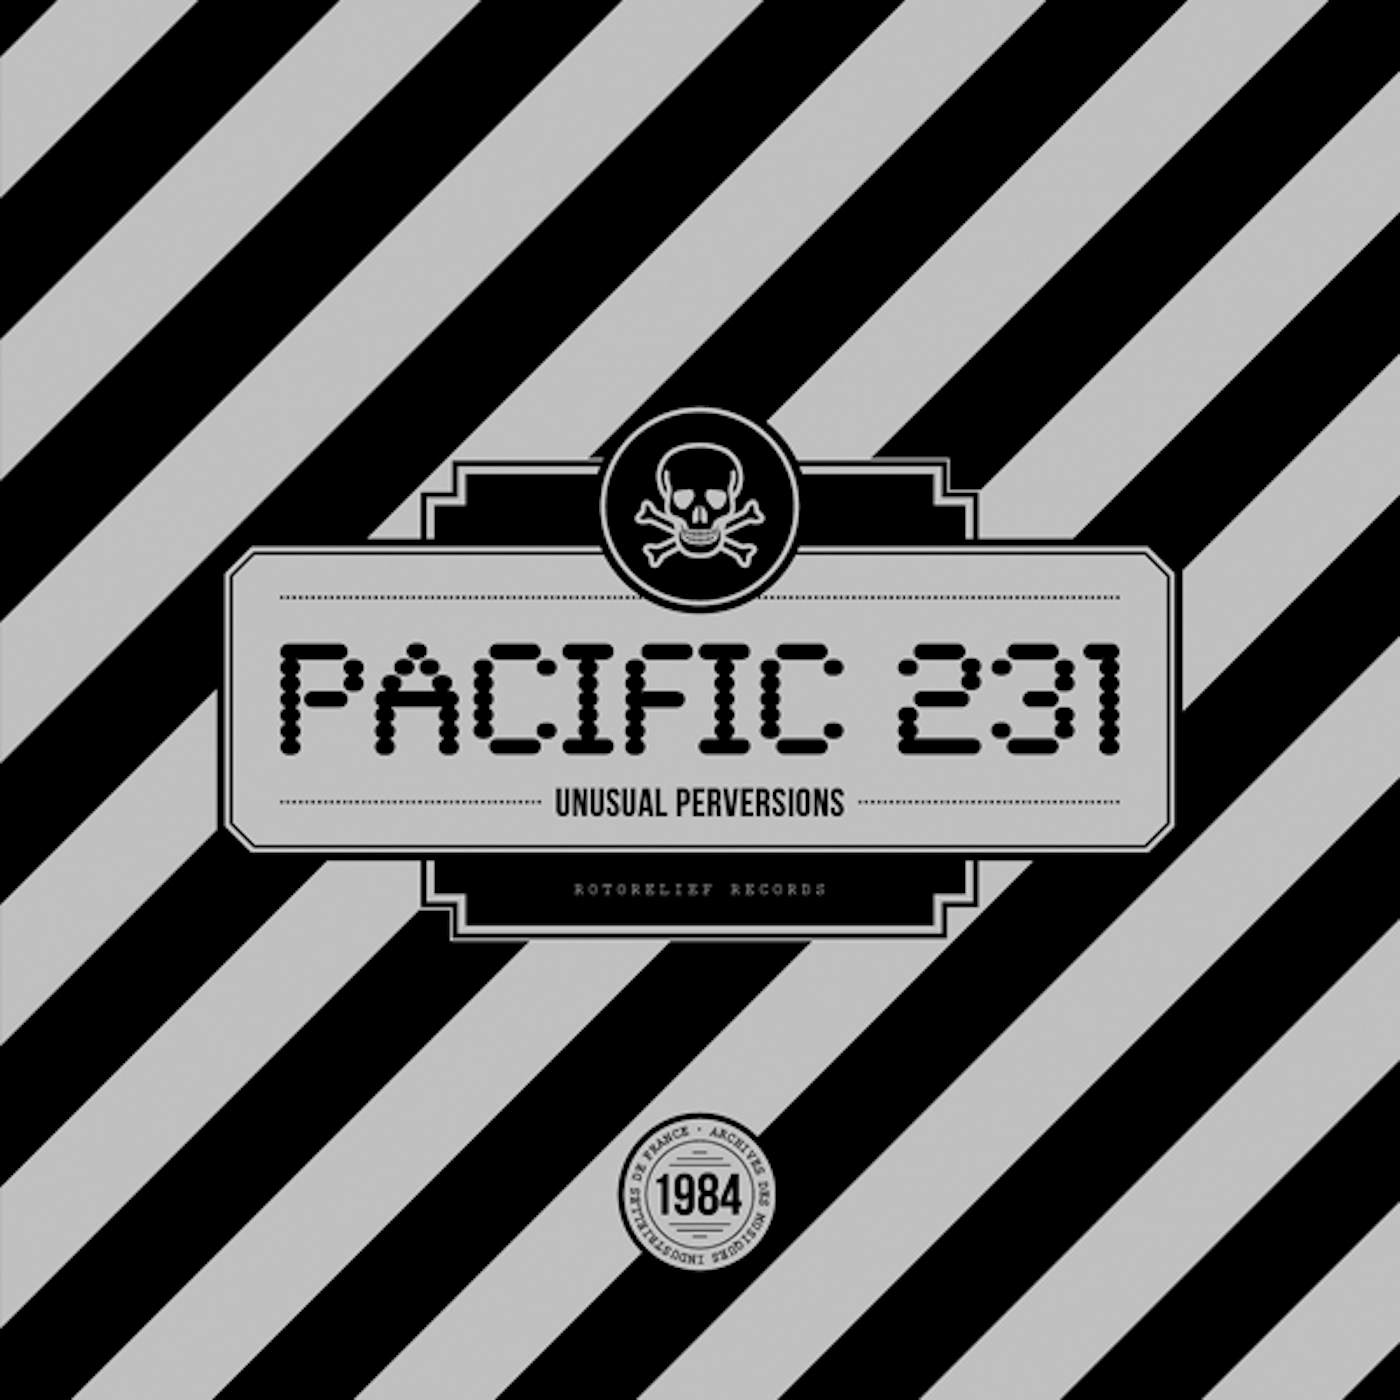 Pacific 231 Unusual Perversions Vinyl Record